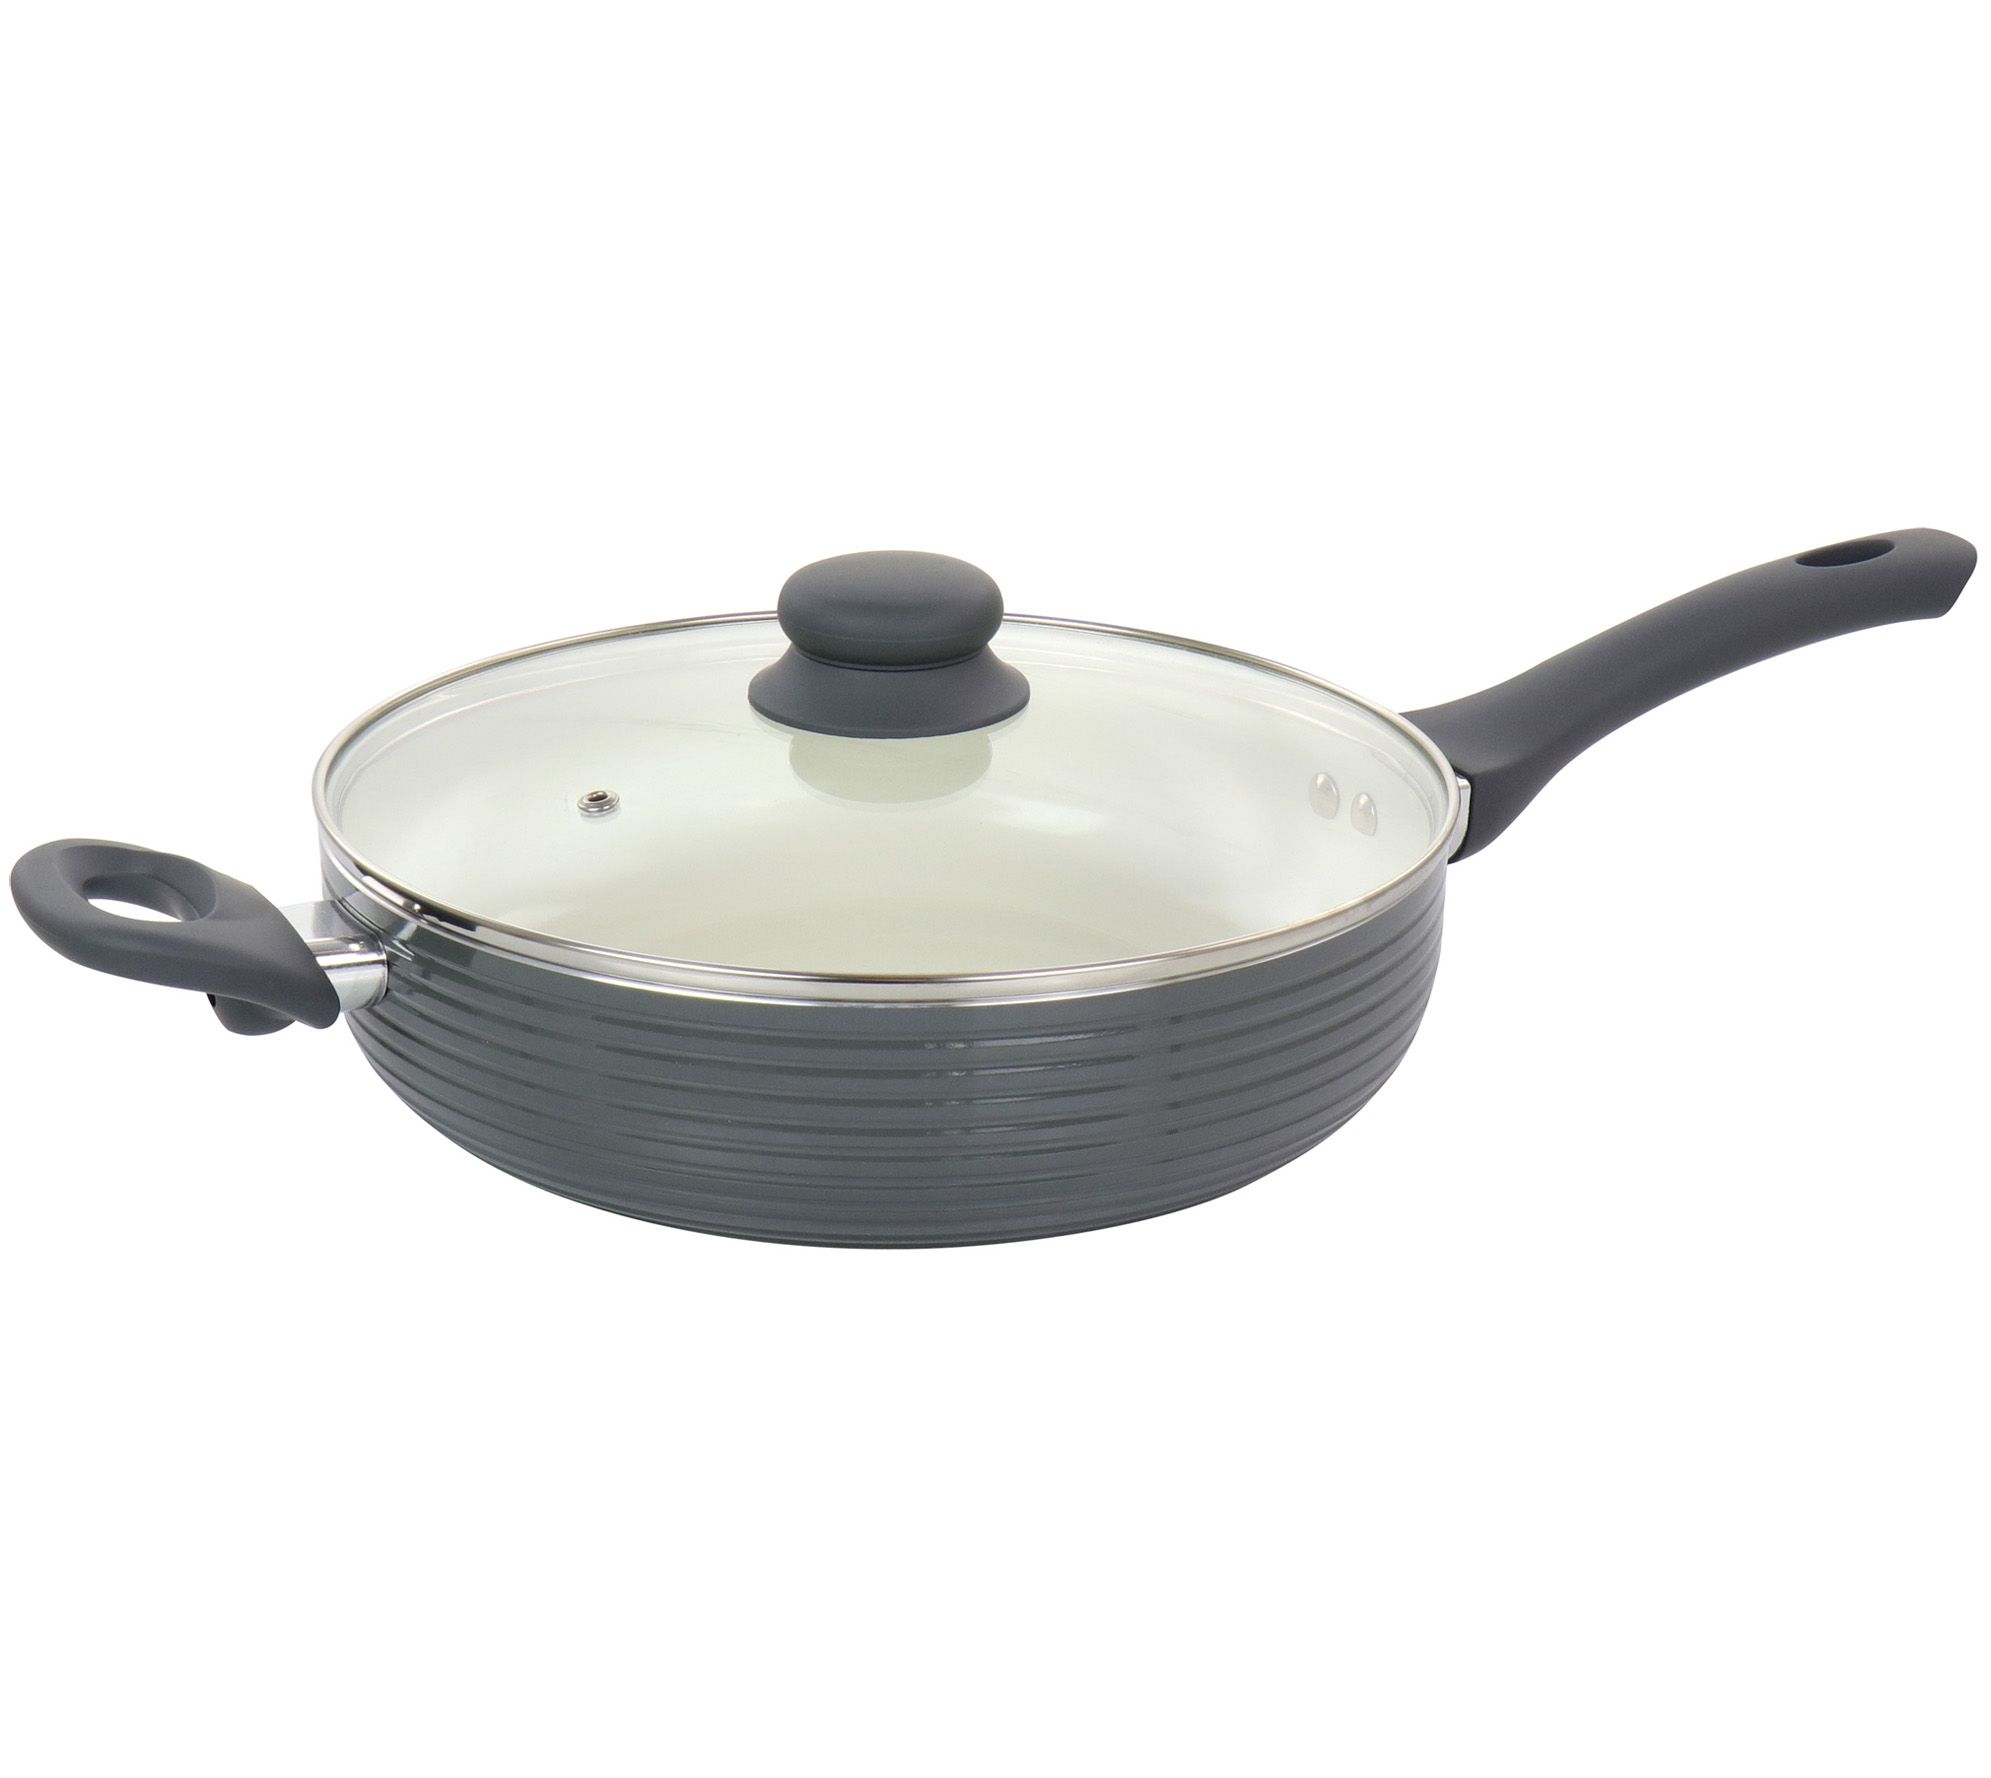 Oster Ashford 5 qt. Aluminum Nonstick Saute Pan in Black with